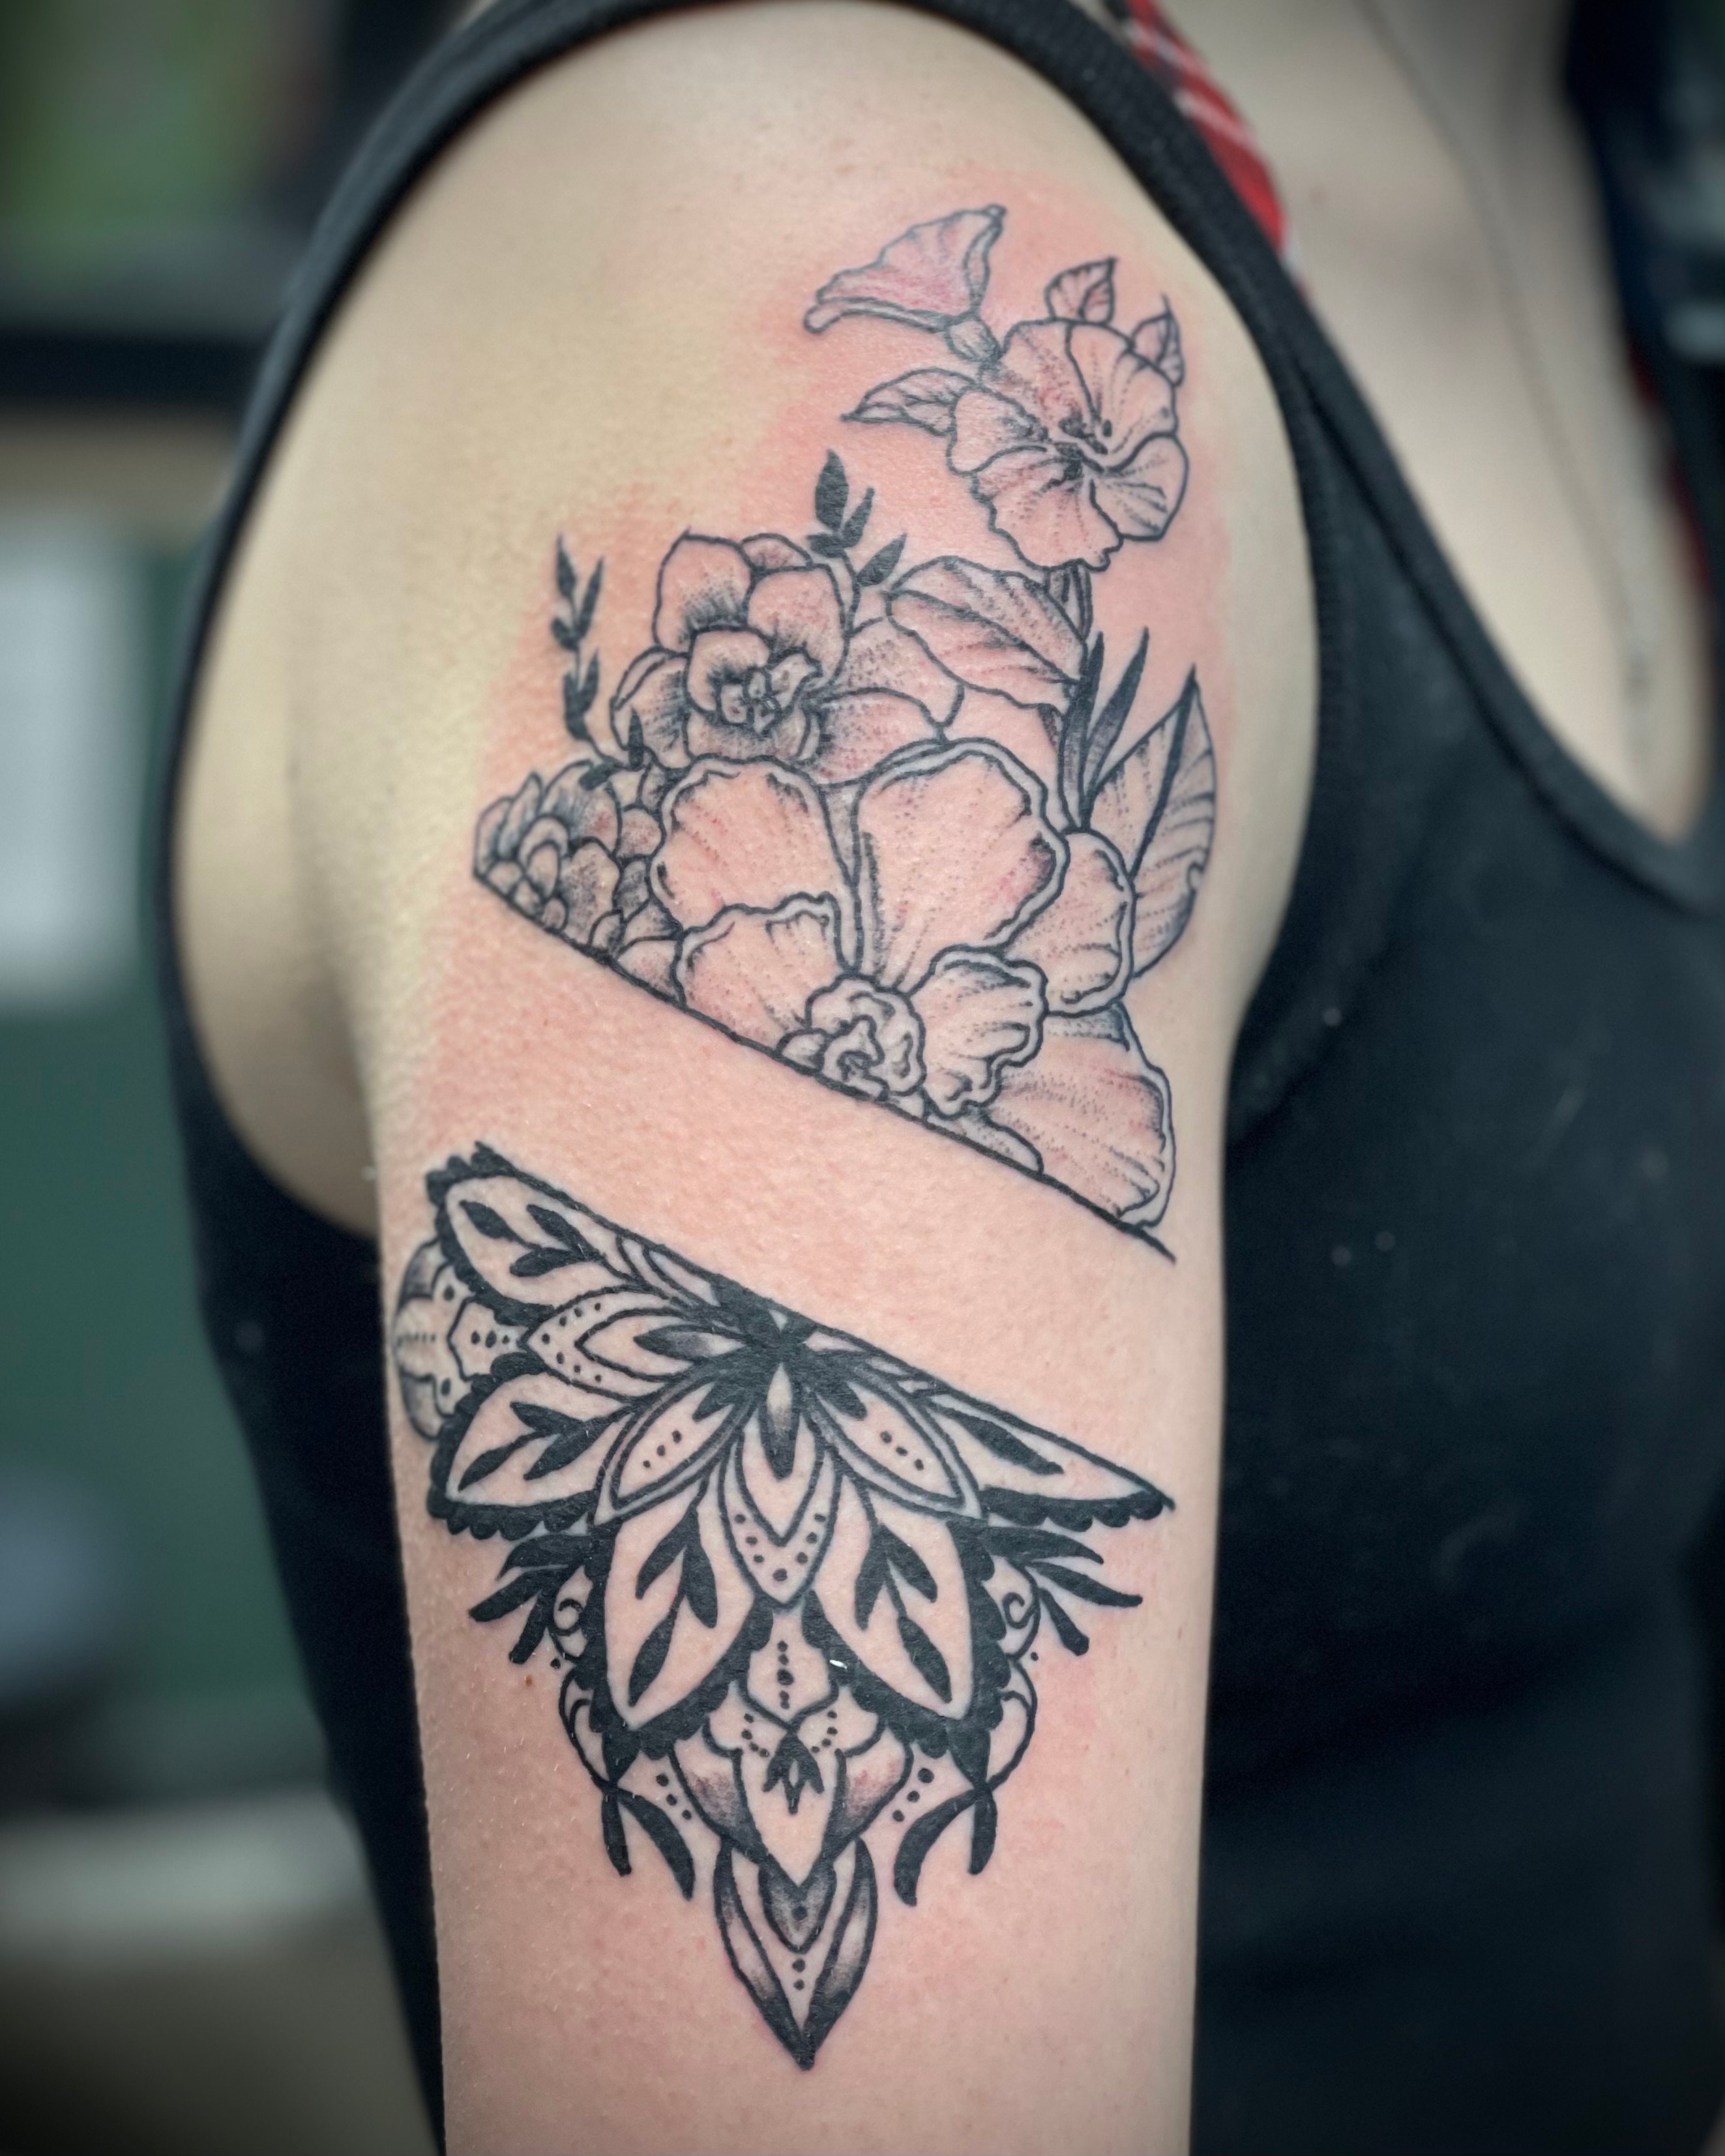 Tattoos for Women - cut sleeve